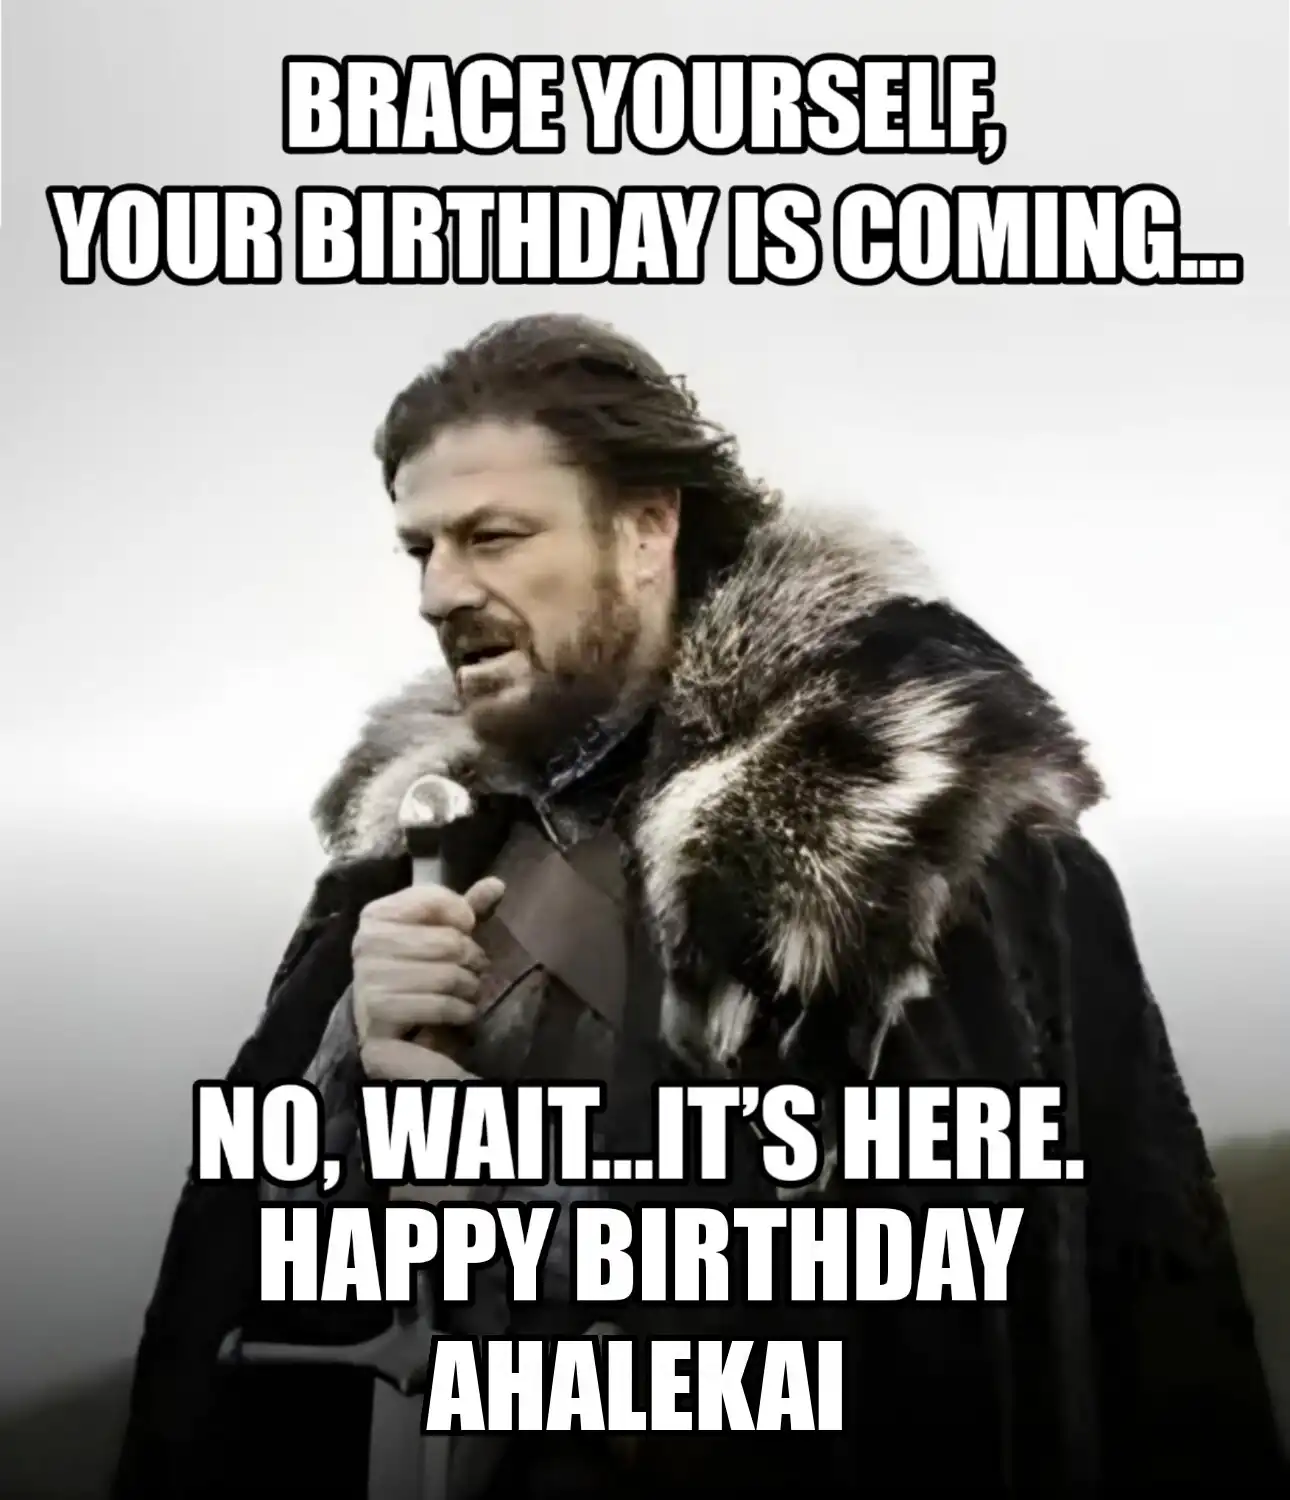 Happy Birthday Ahalekai Brace Yourself Your Birthday Is Coming Meme